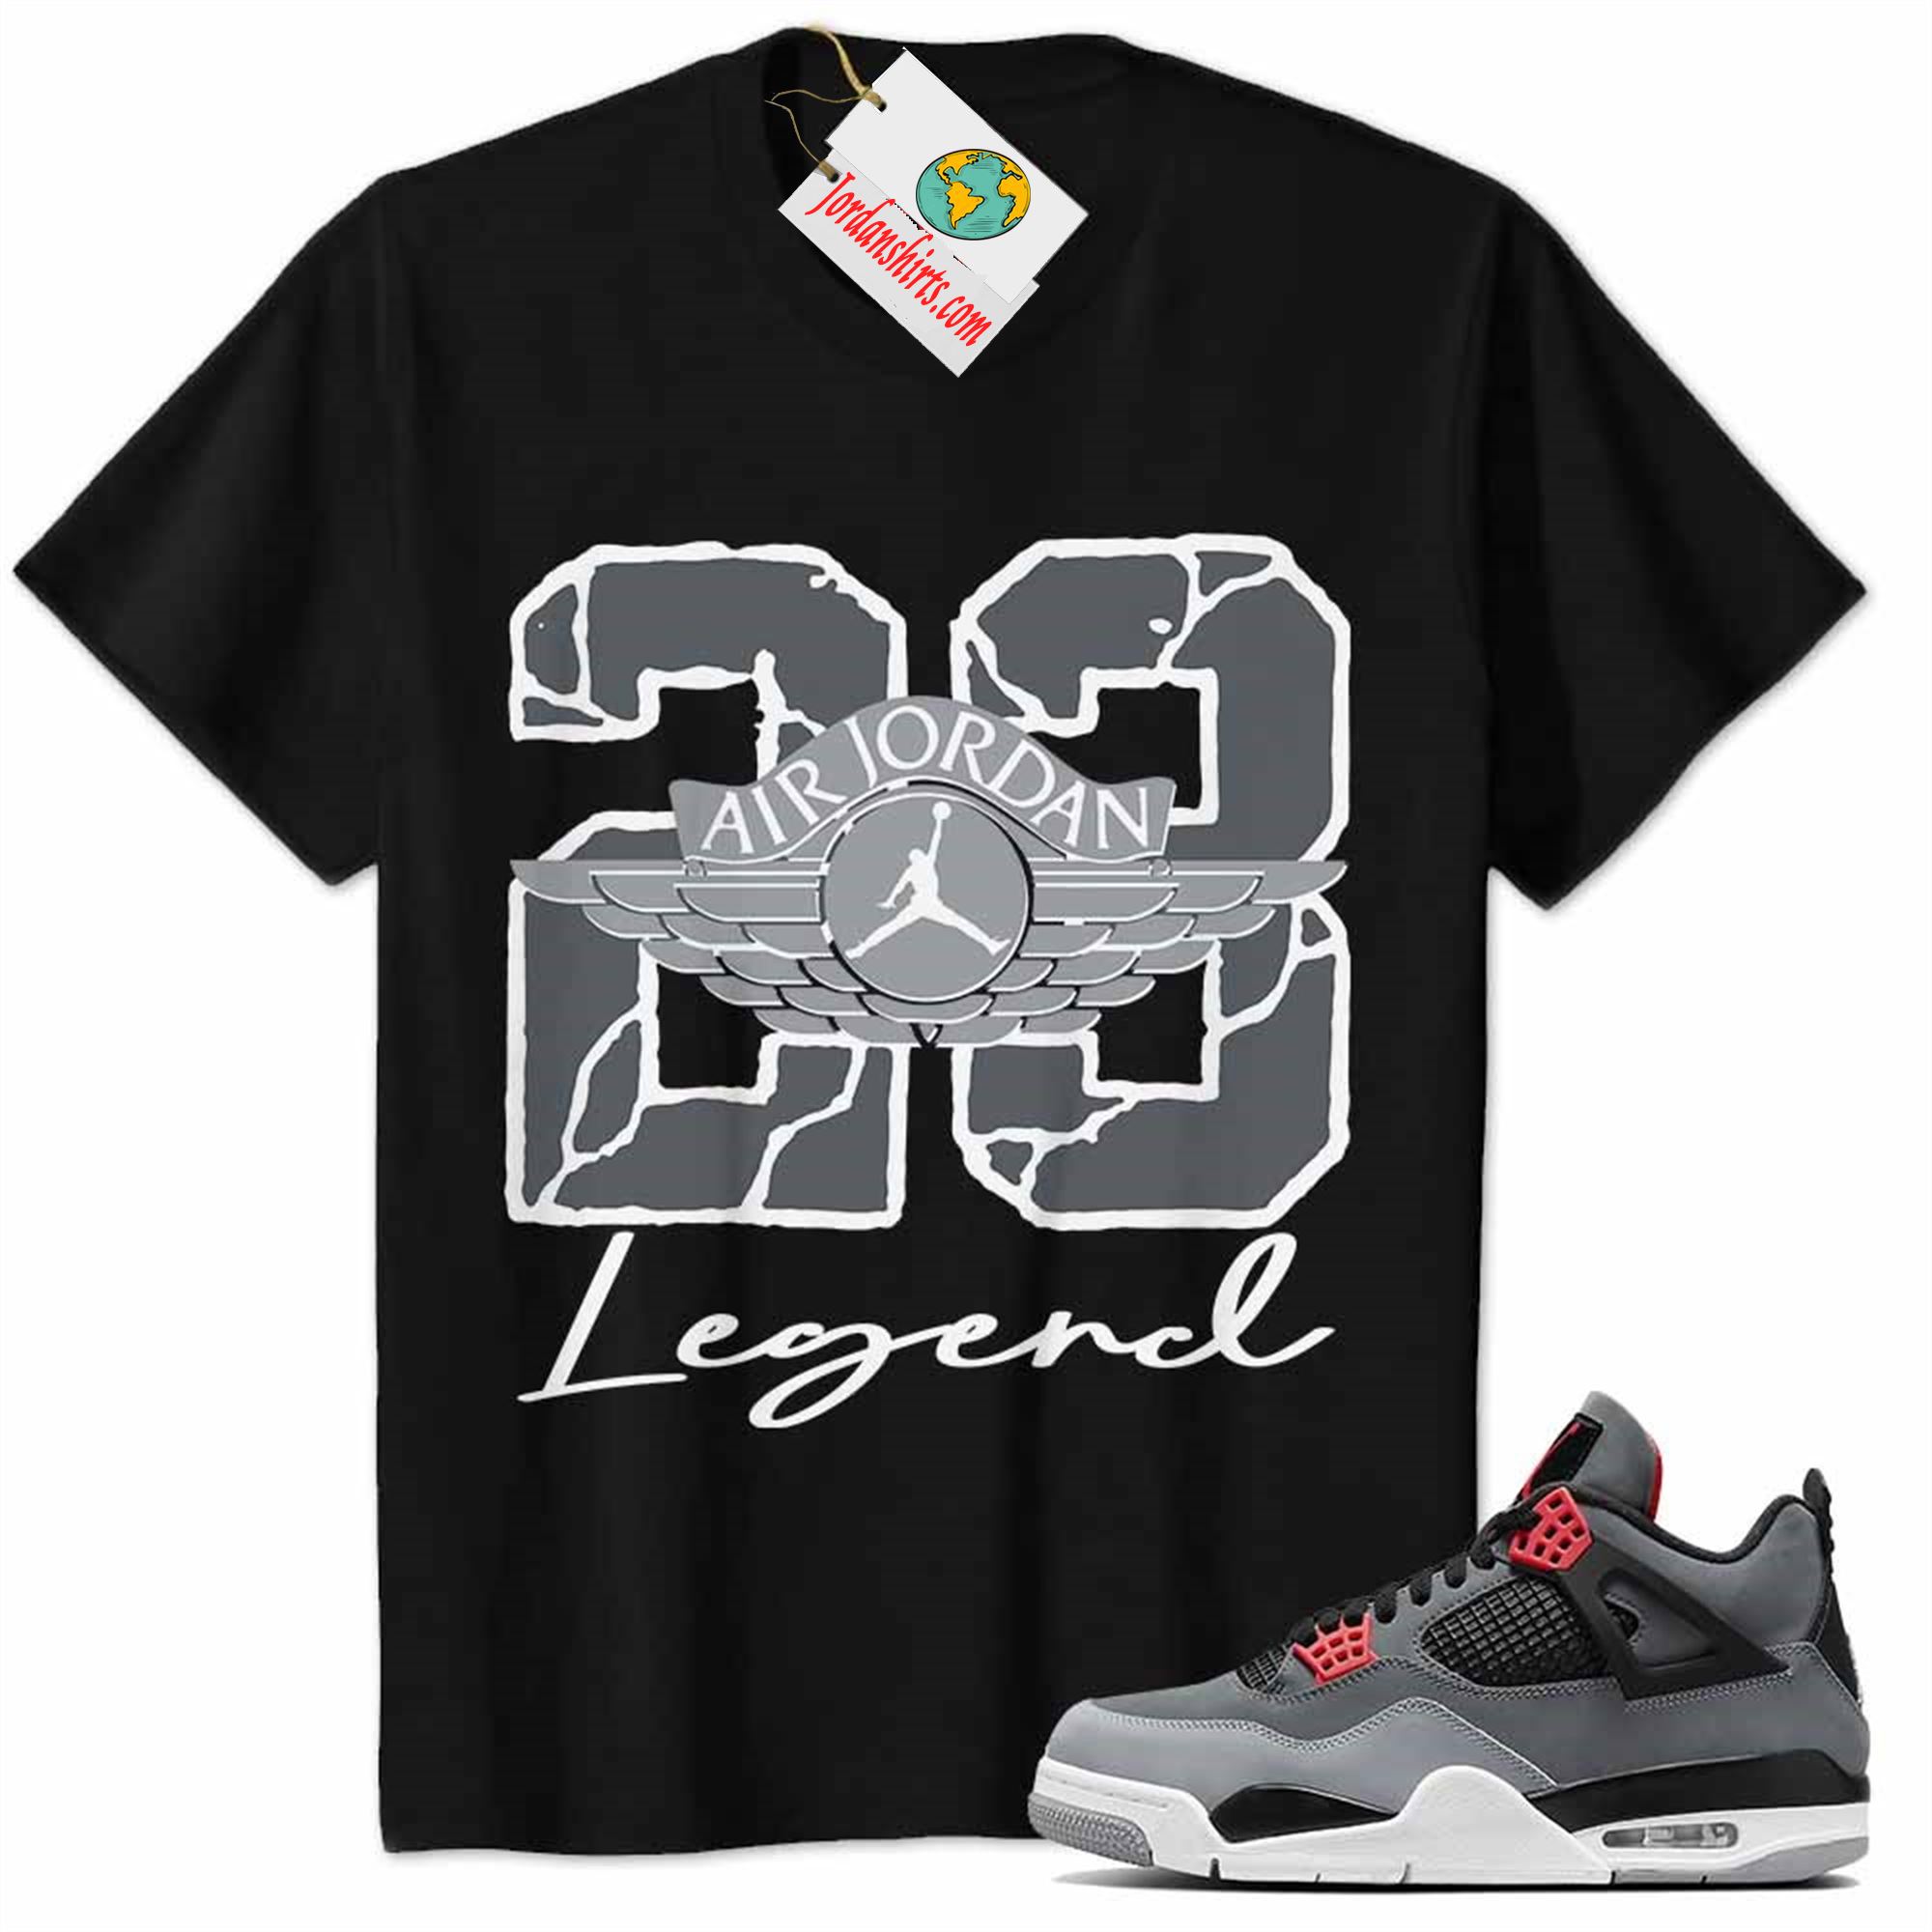 Jordan 4 Shirt, Jordan 4 Infrared 23 Shirt Shirt 23 Jordan Number Legend Black Full Size Up To 5xl